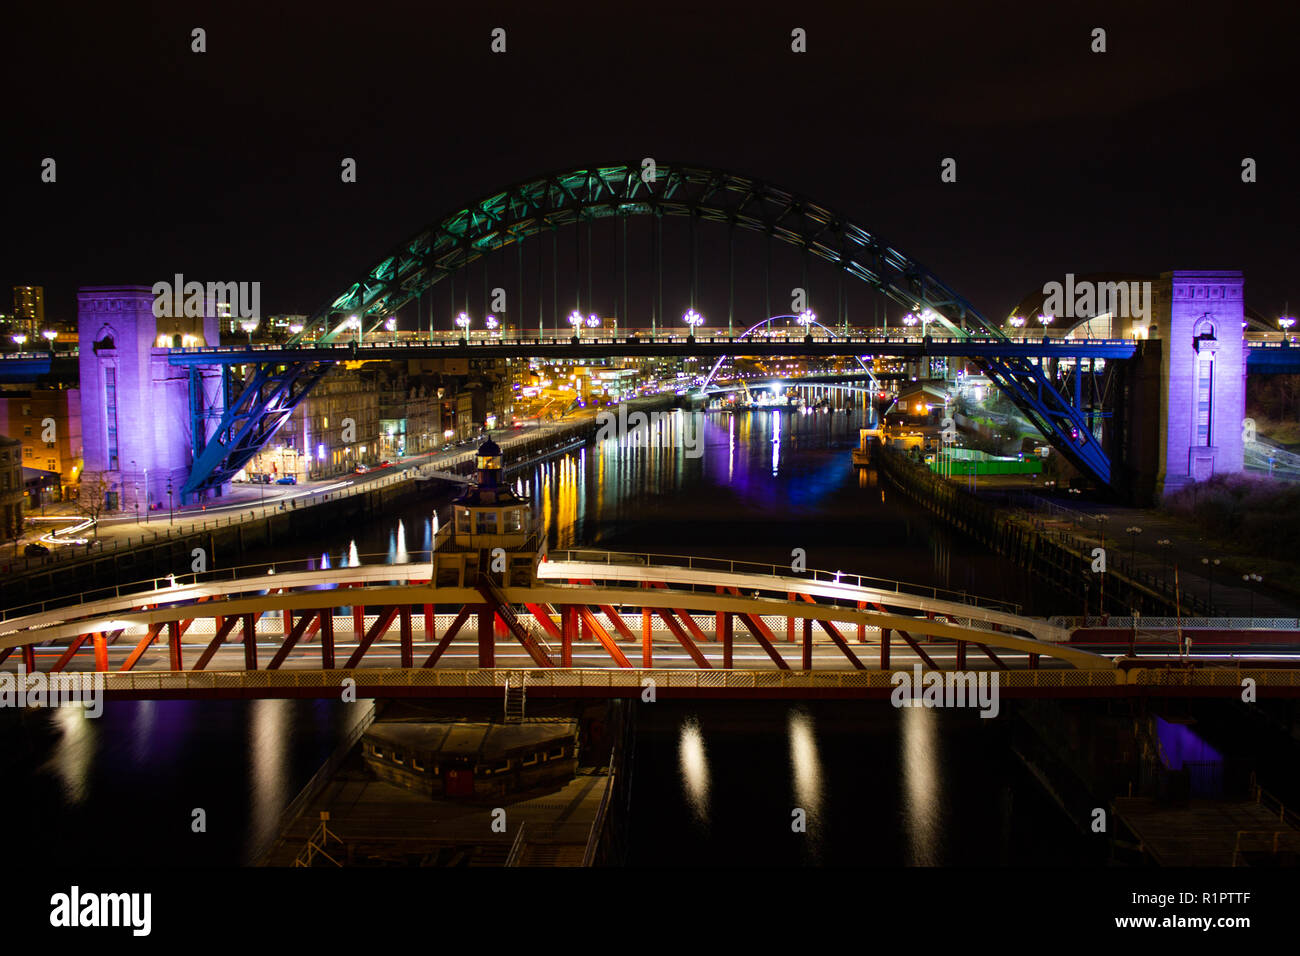 Newcastle upon Tyne/England - February 17th 2012: Tyne Bridge and swing bridge at night Stock Photo